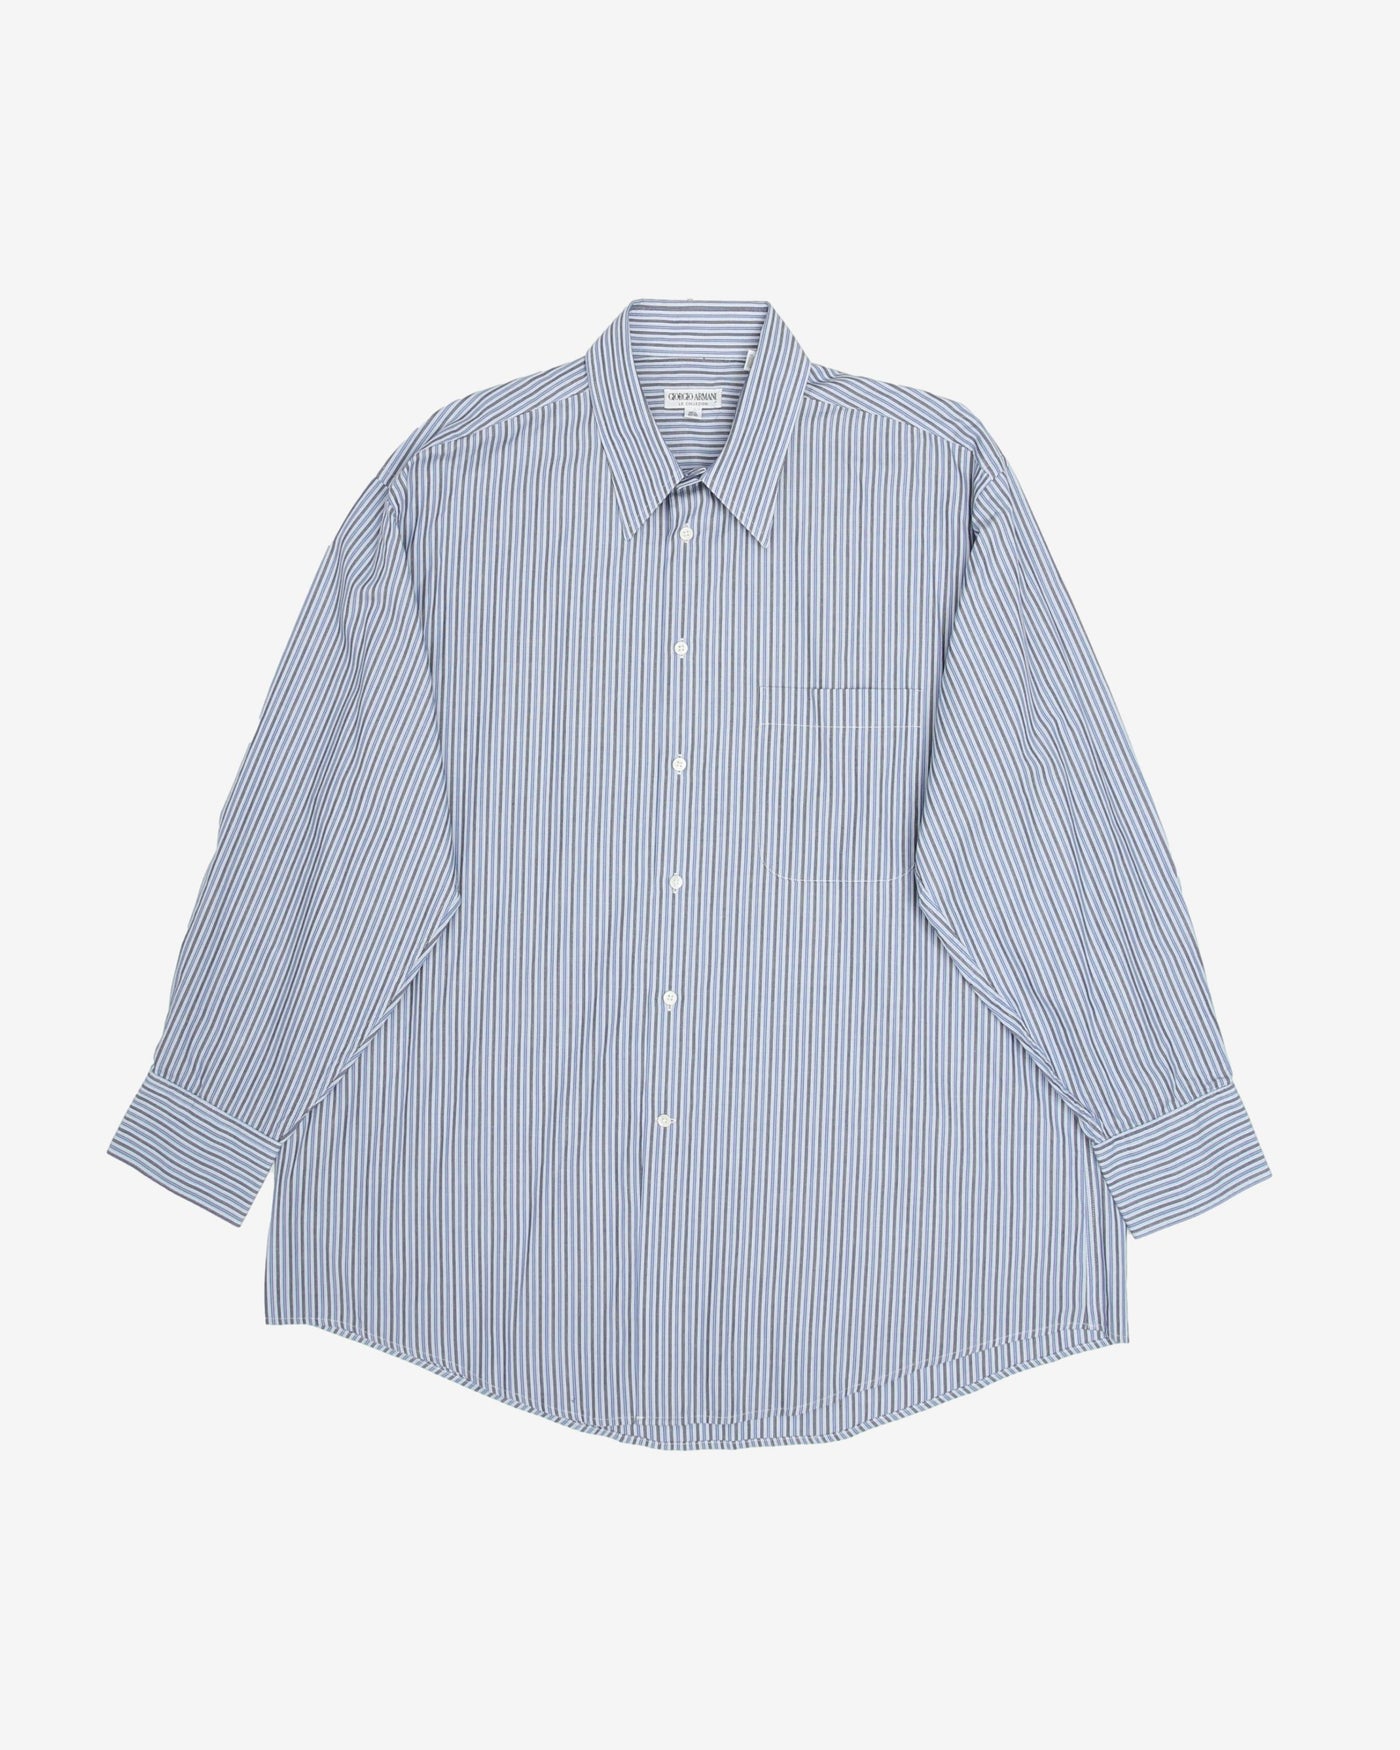 Vintage Giorgio Armani Striped Long-Sleeve Button Up Shirt - XL